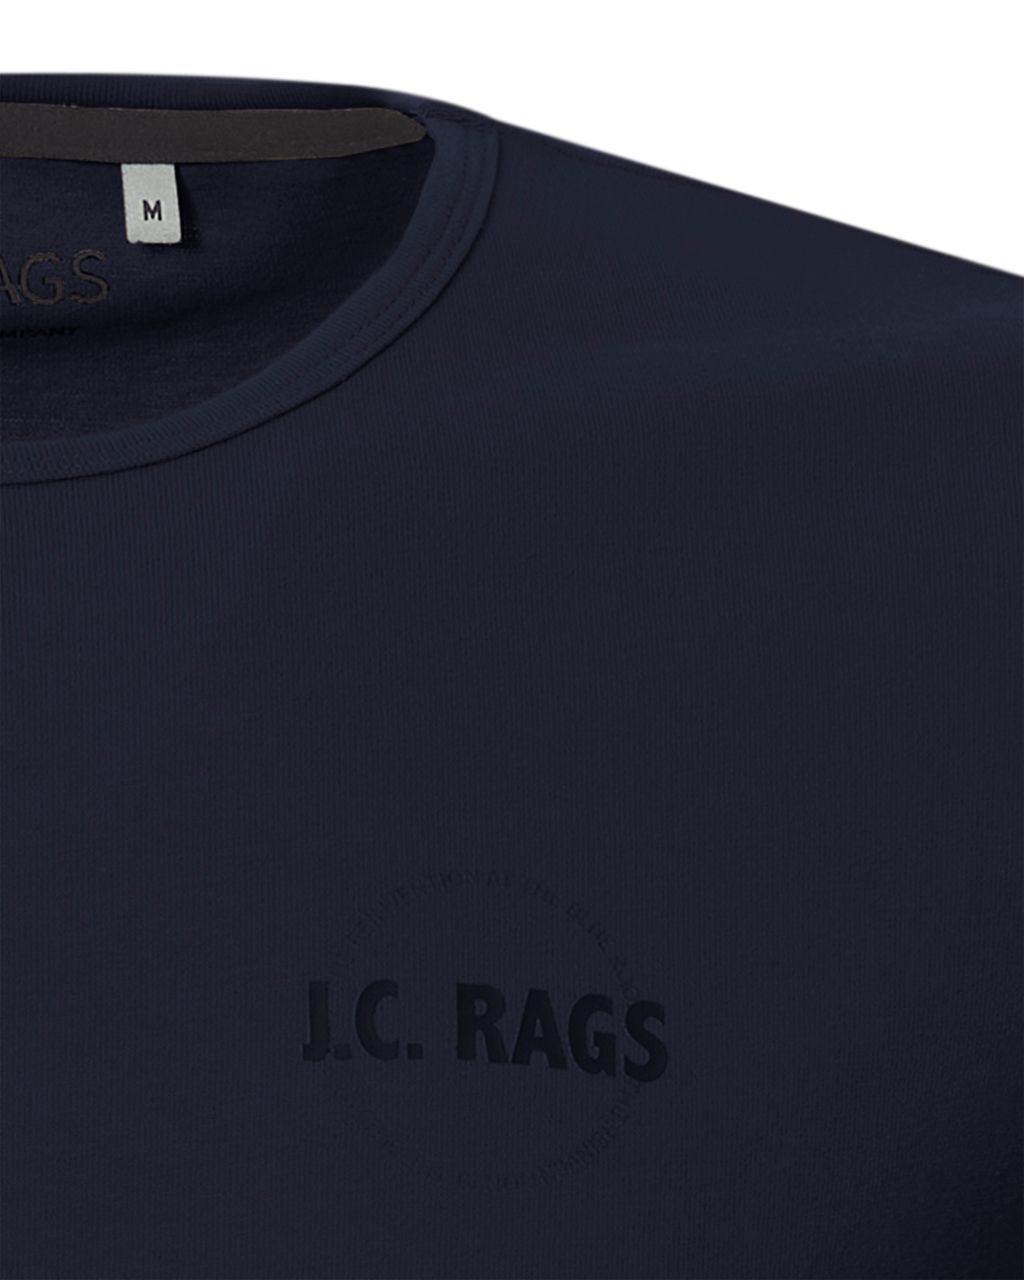 J.C. RAGS  Johan T-shirt KM Navy uni 073071-004-L